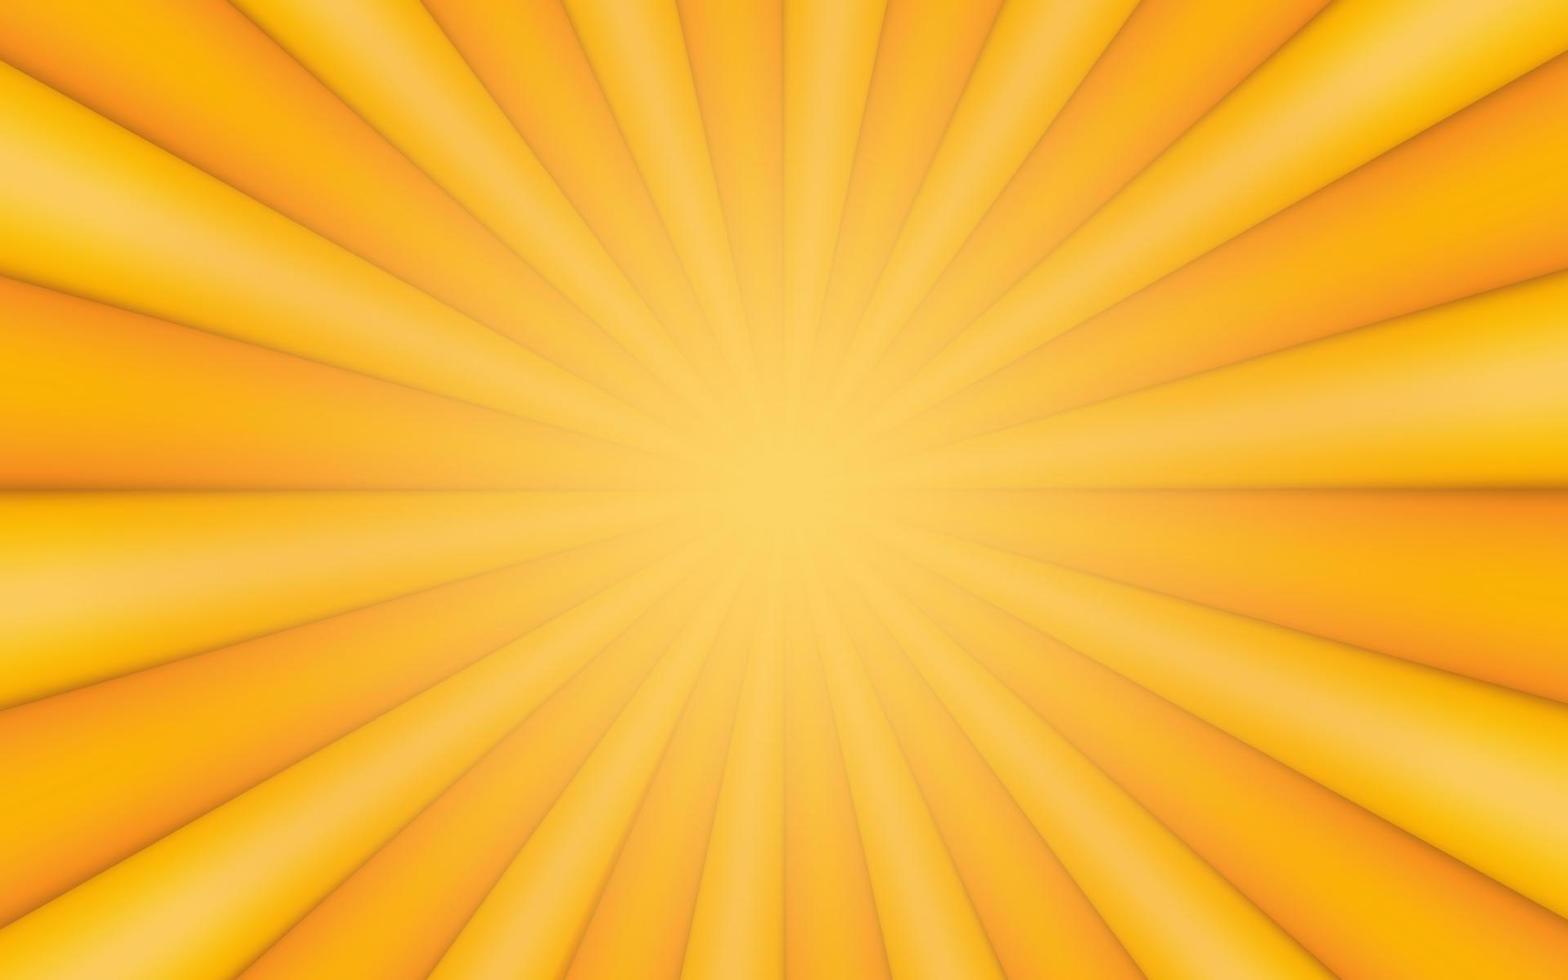 Sun rays retro vintage style on yellow background, Comic pattern with sunburst 3d background. Rays. Summer banner vector illustration